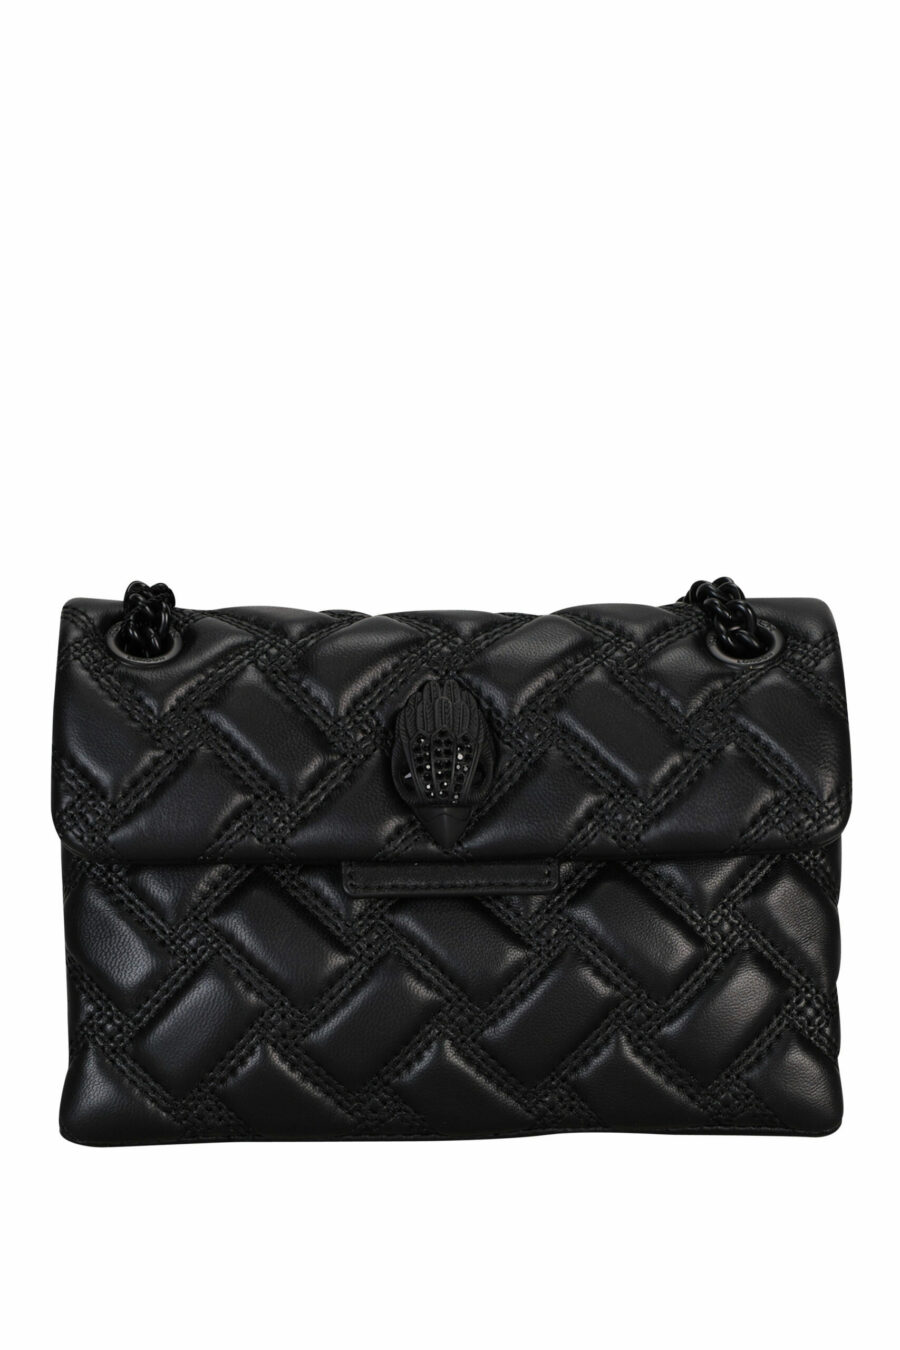 Mini black shoulder bag with diagonal lines and black eagle logo with black cristrals - 5020413709135 scaled